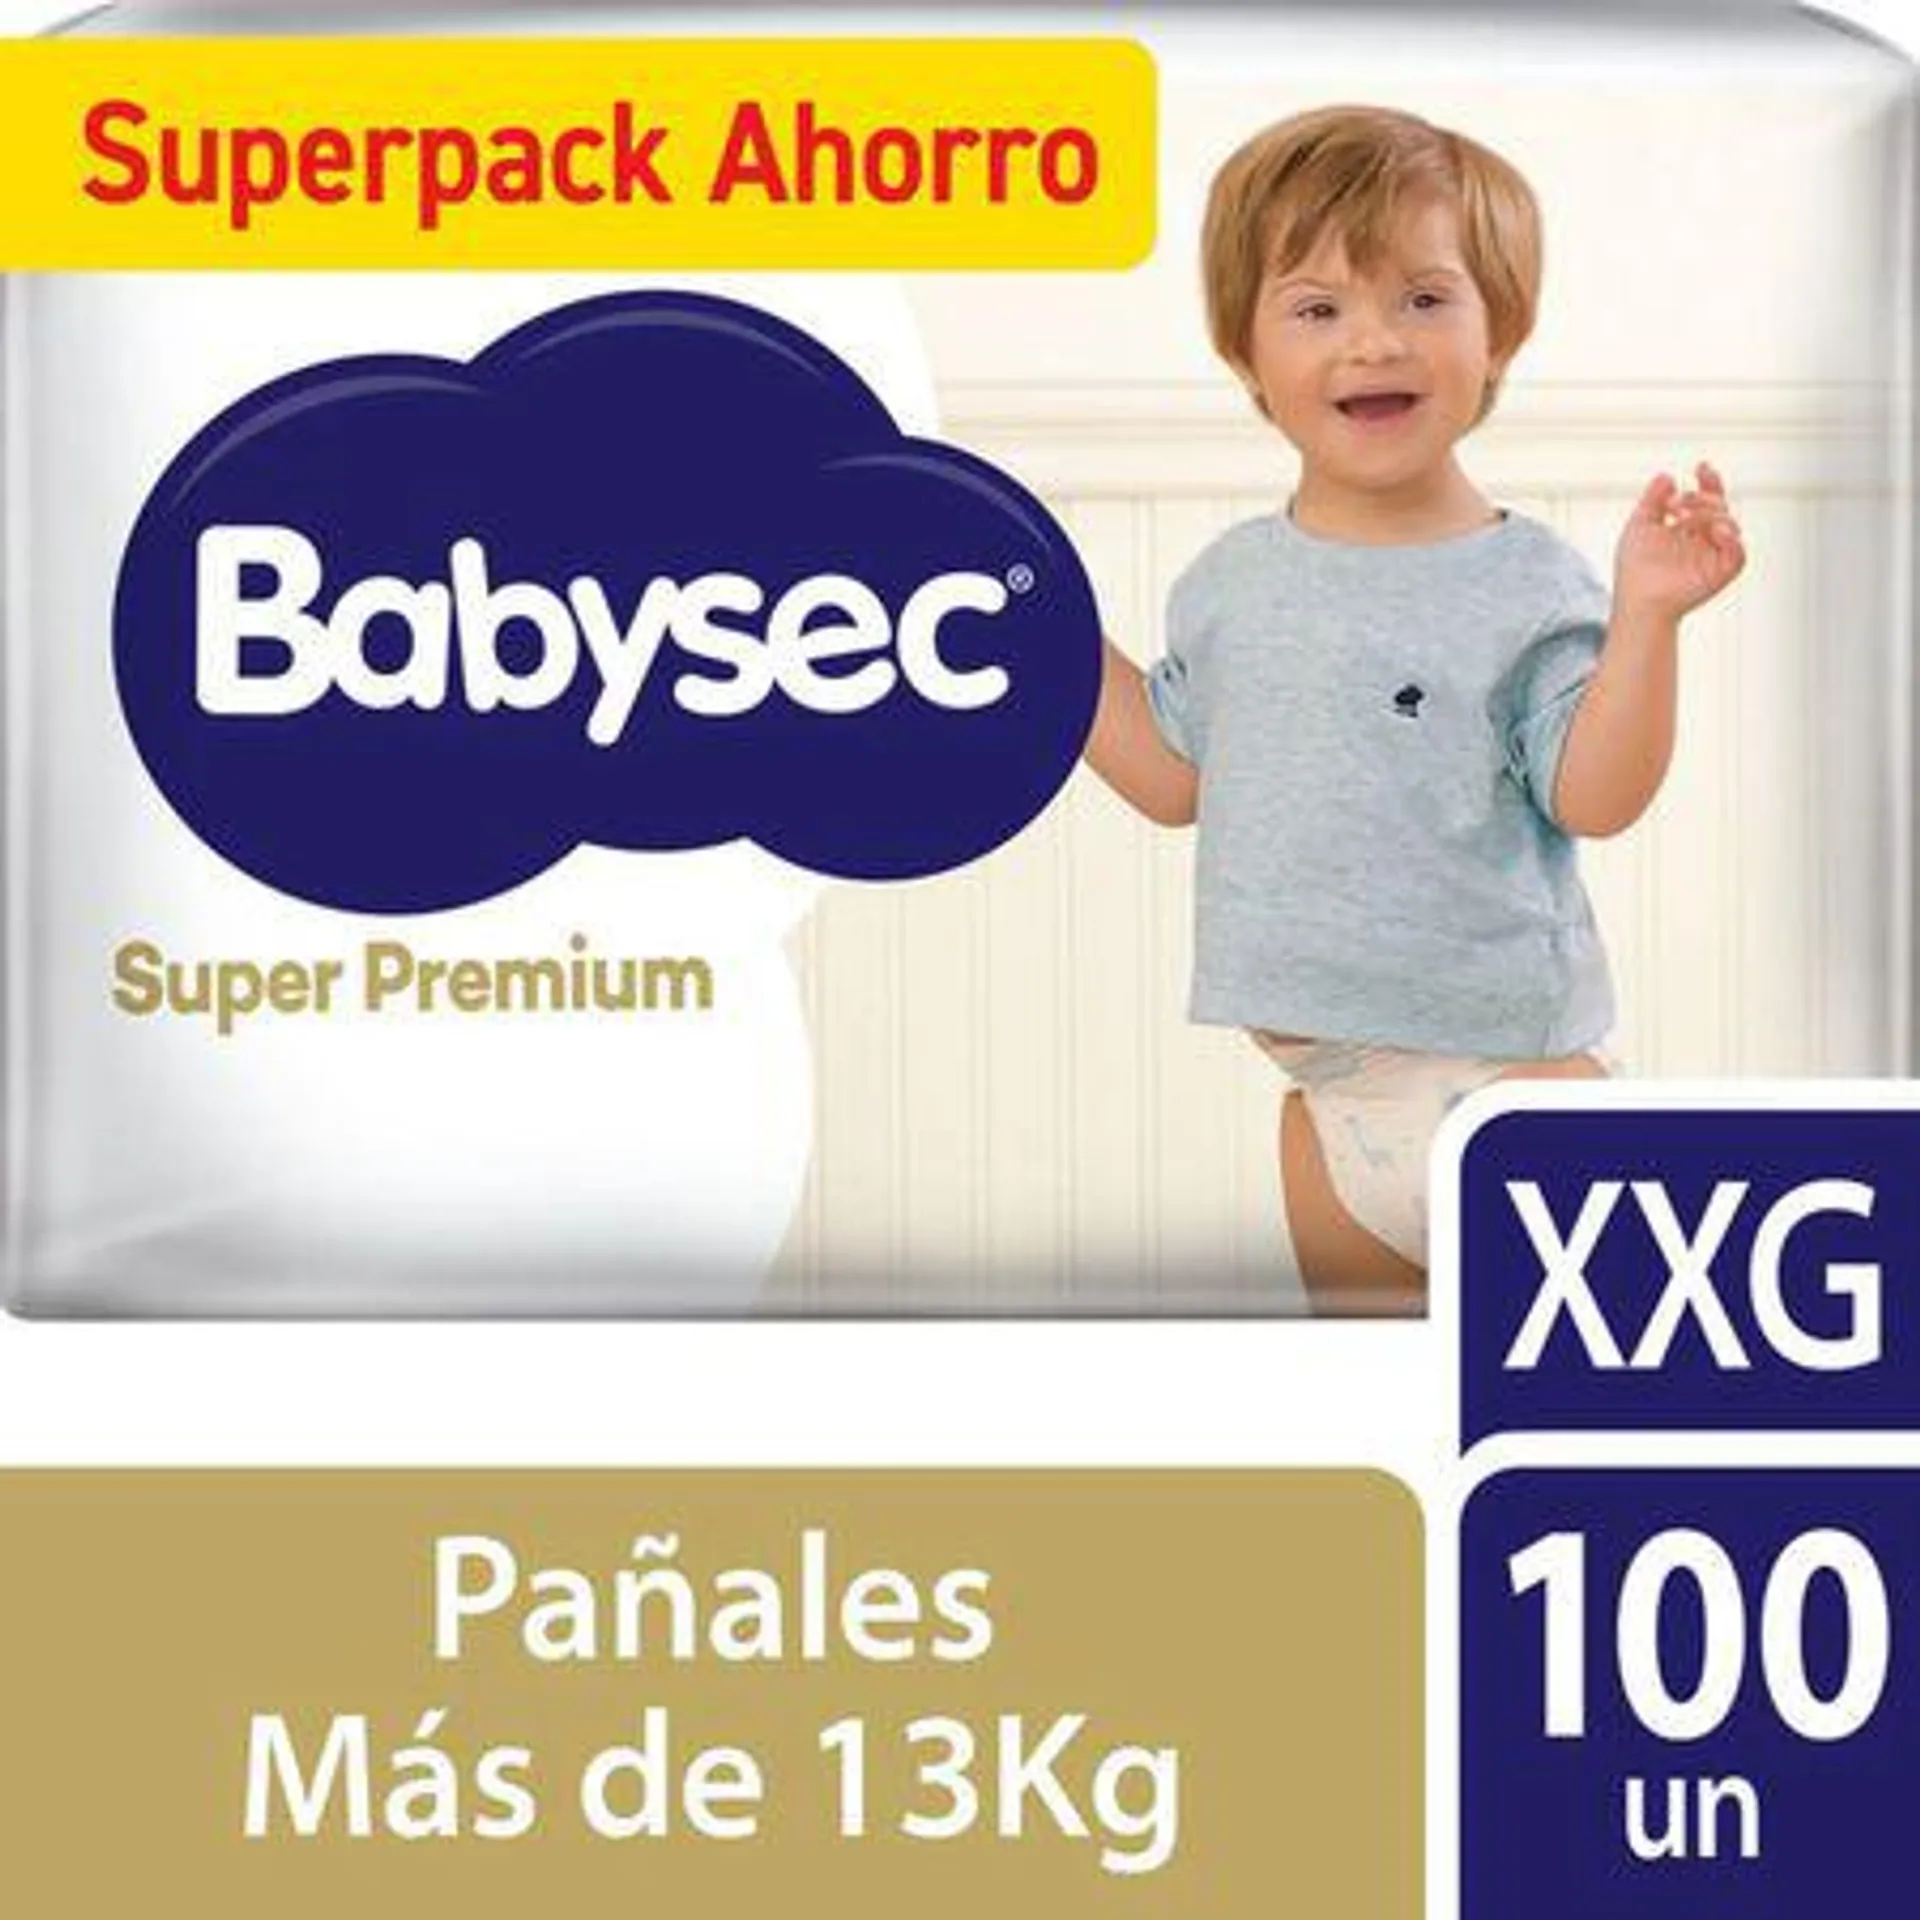 Pañales Babysec Super Premium Talla XXG 100 un.